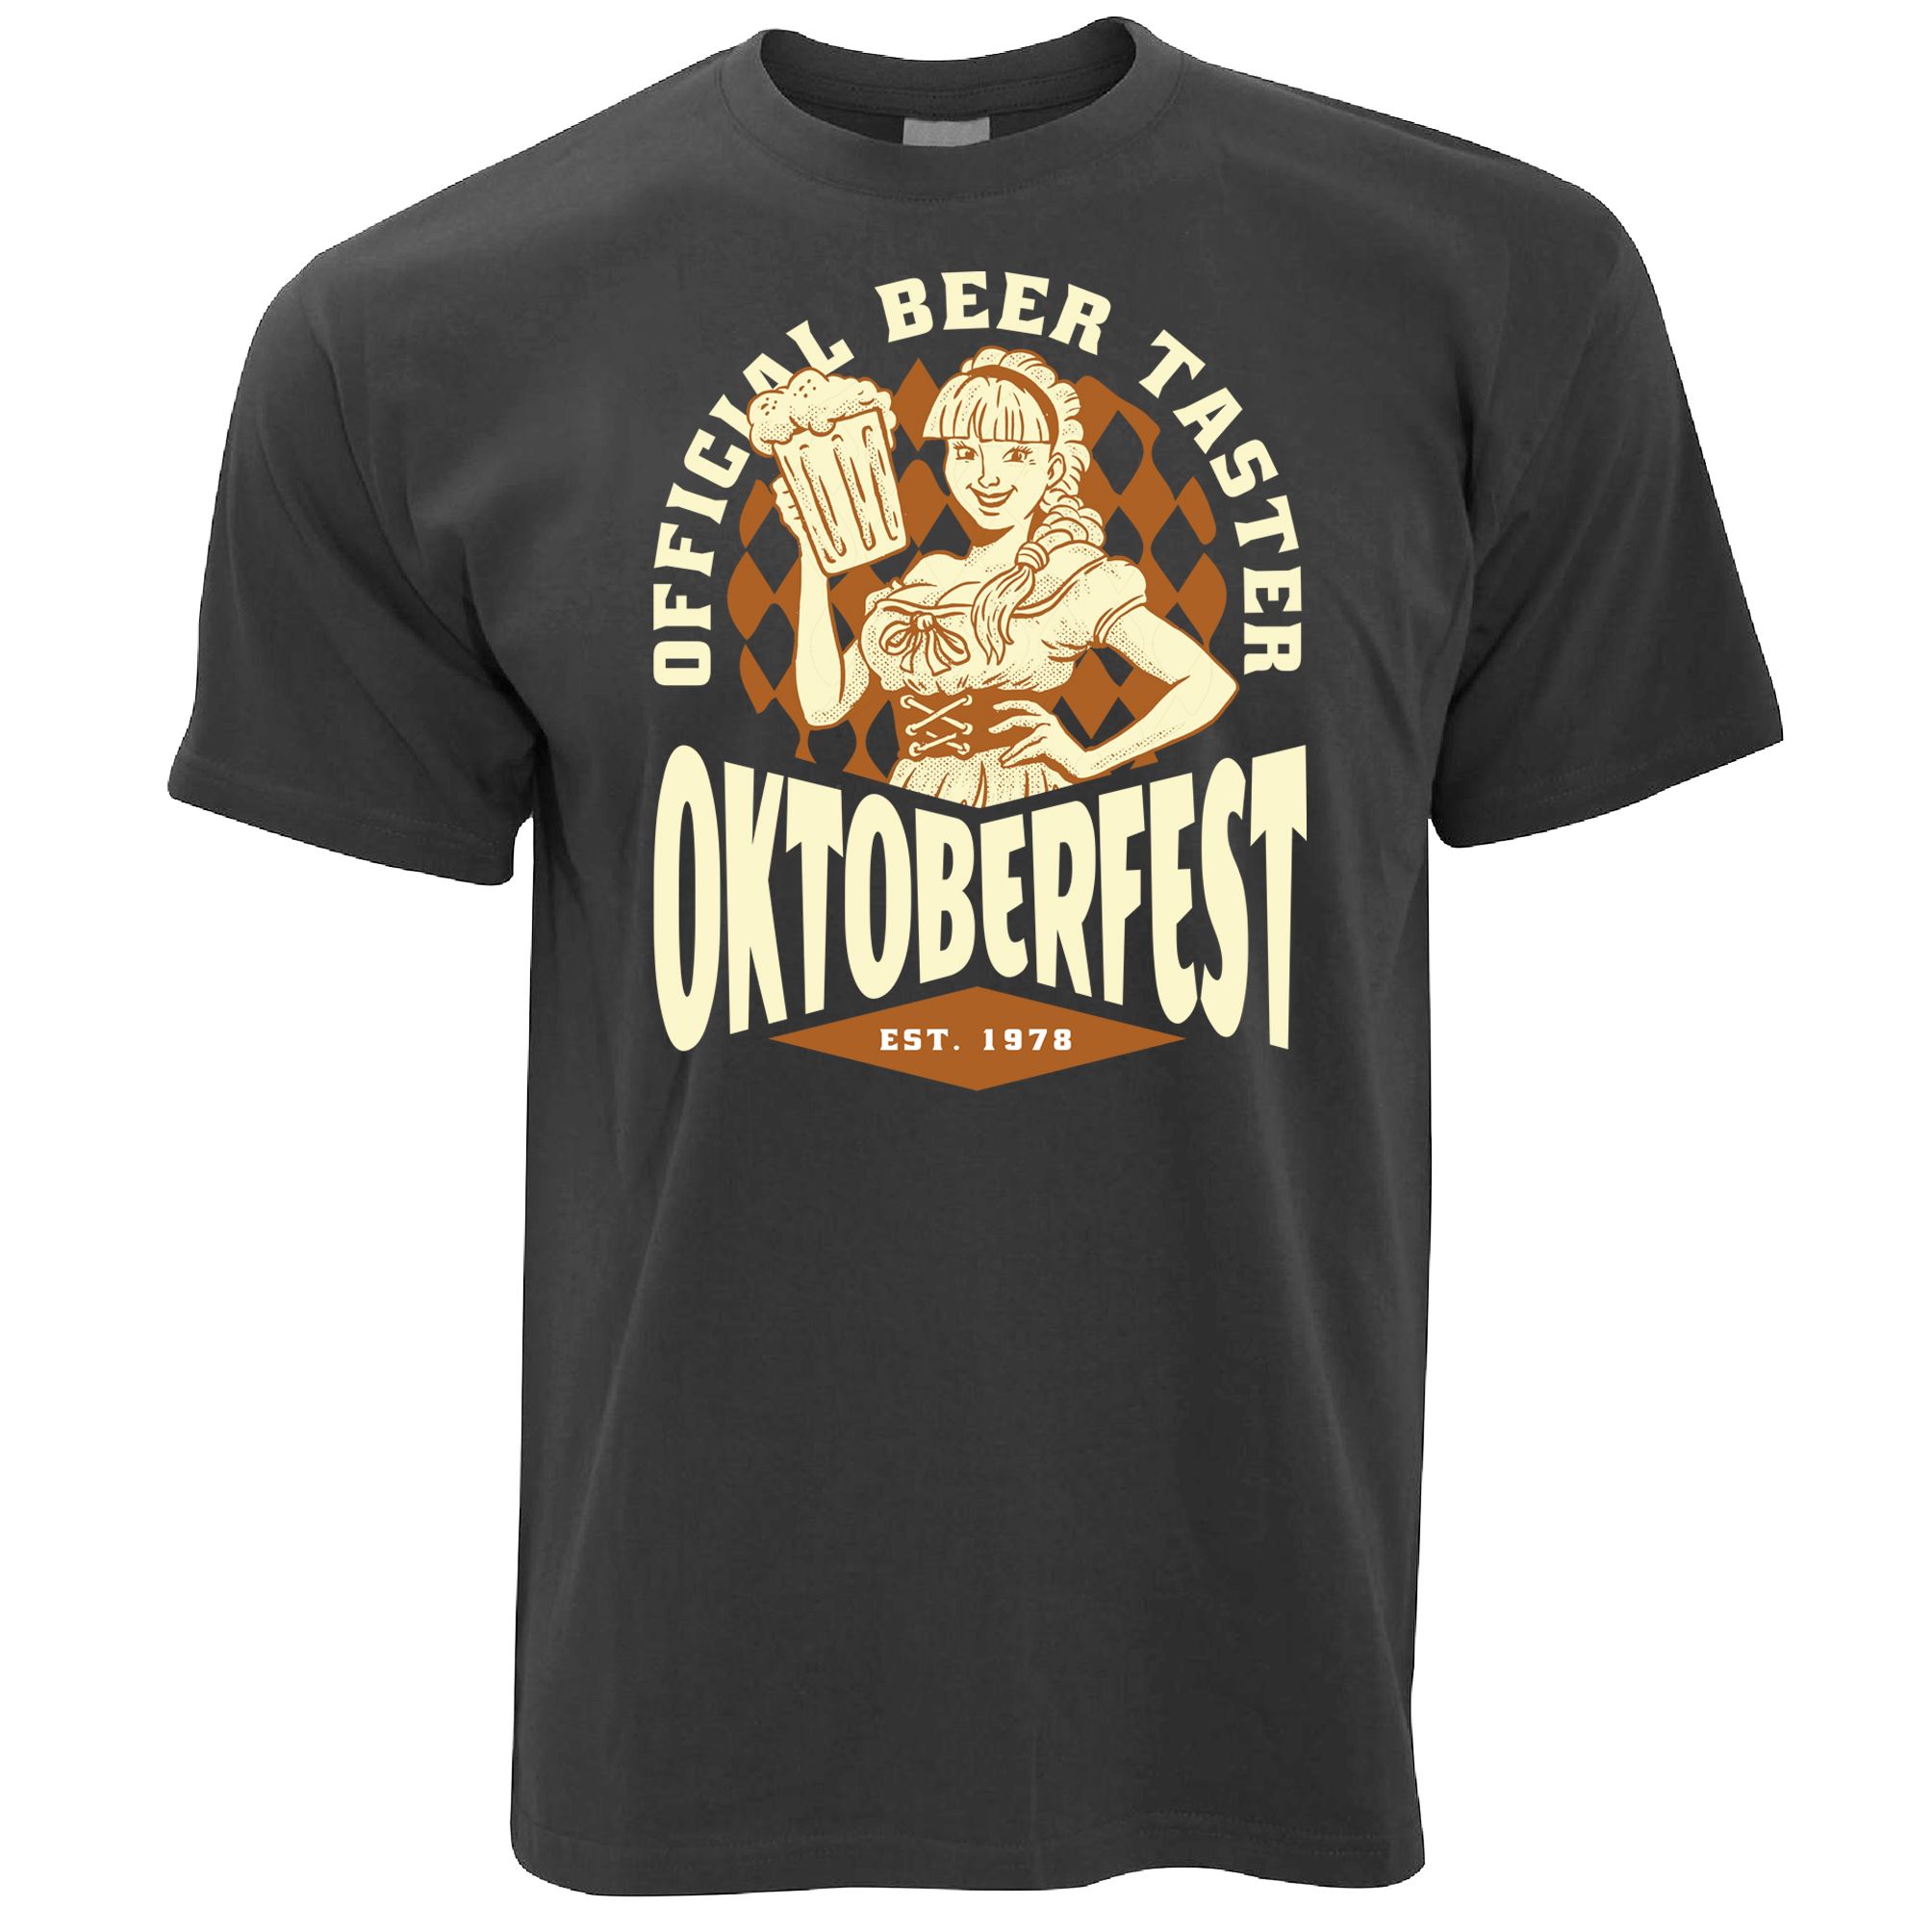 Oktoberfest Beer Taster T Shirt